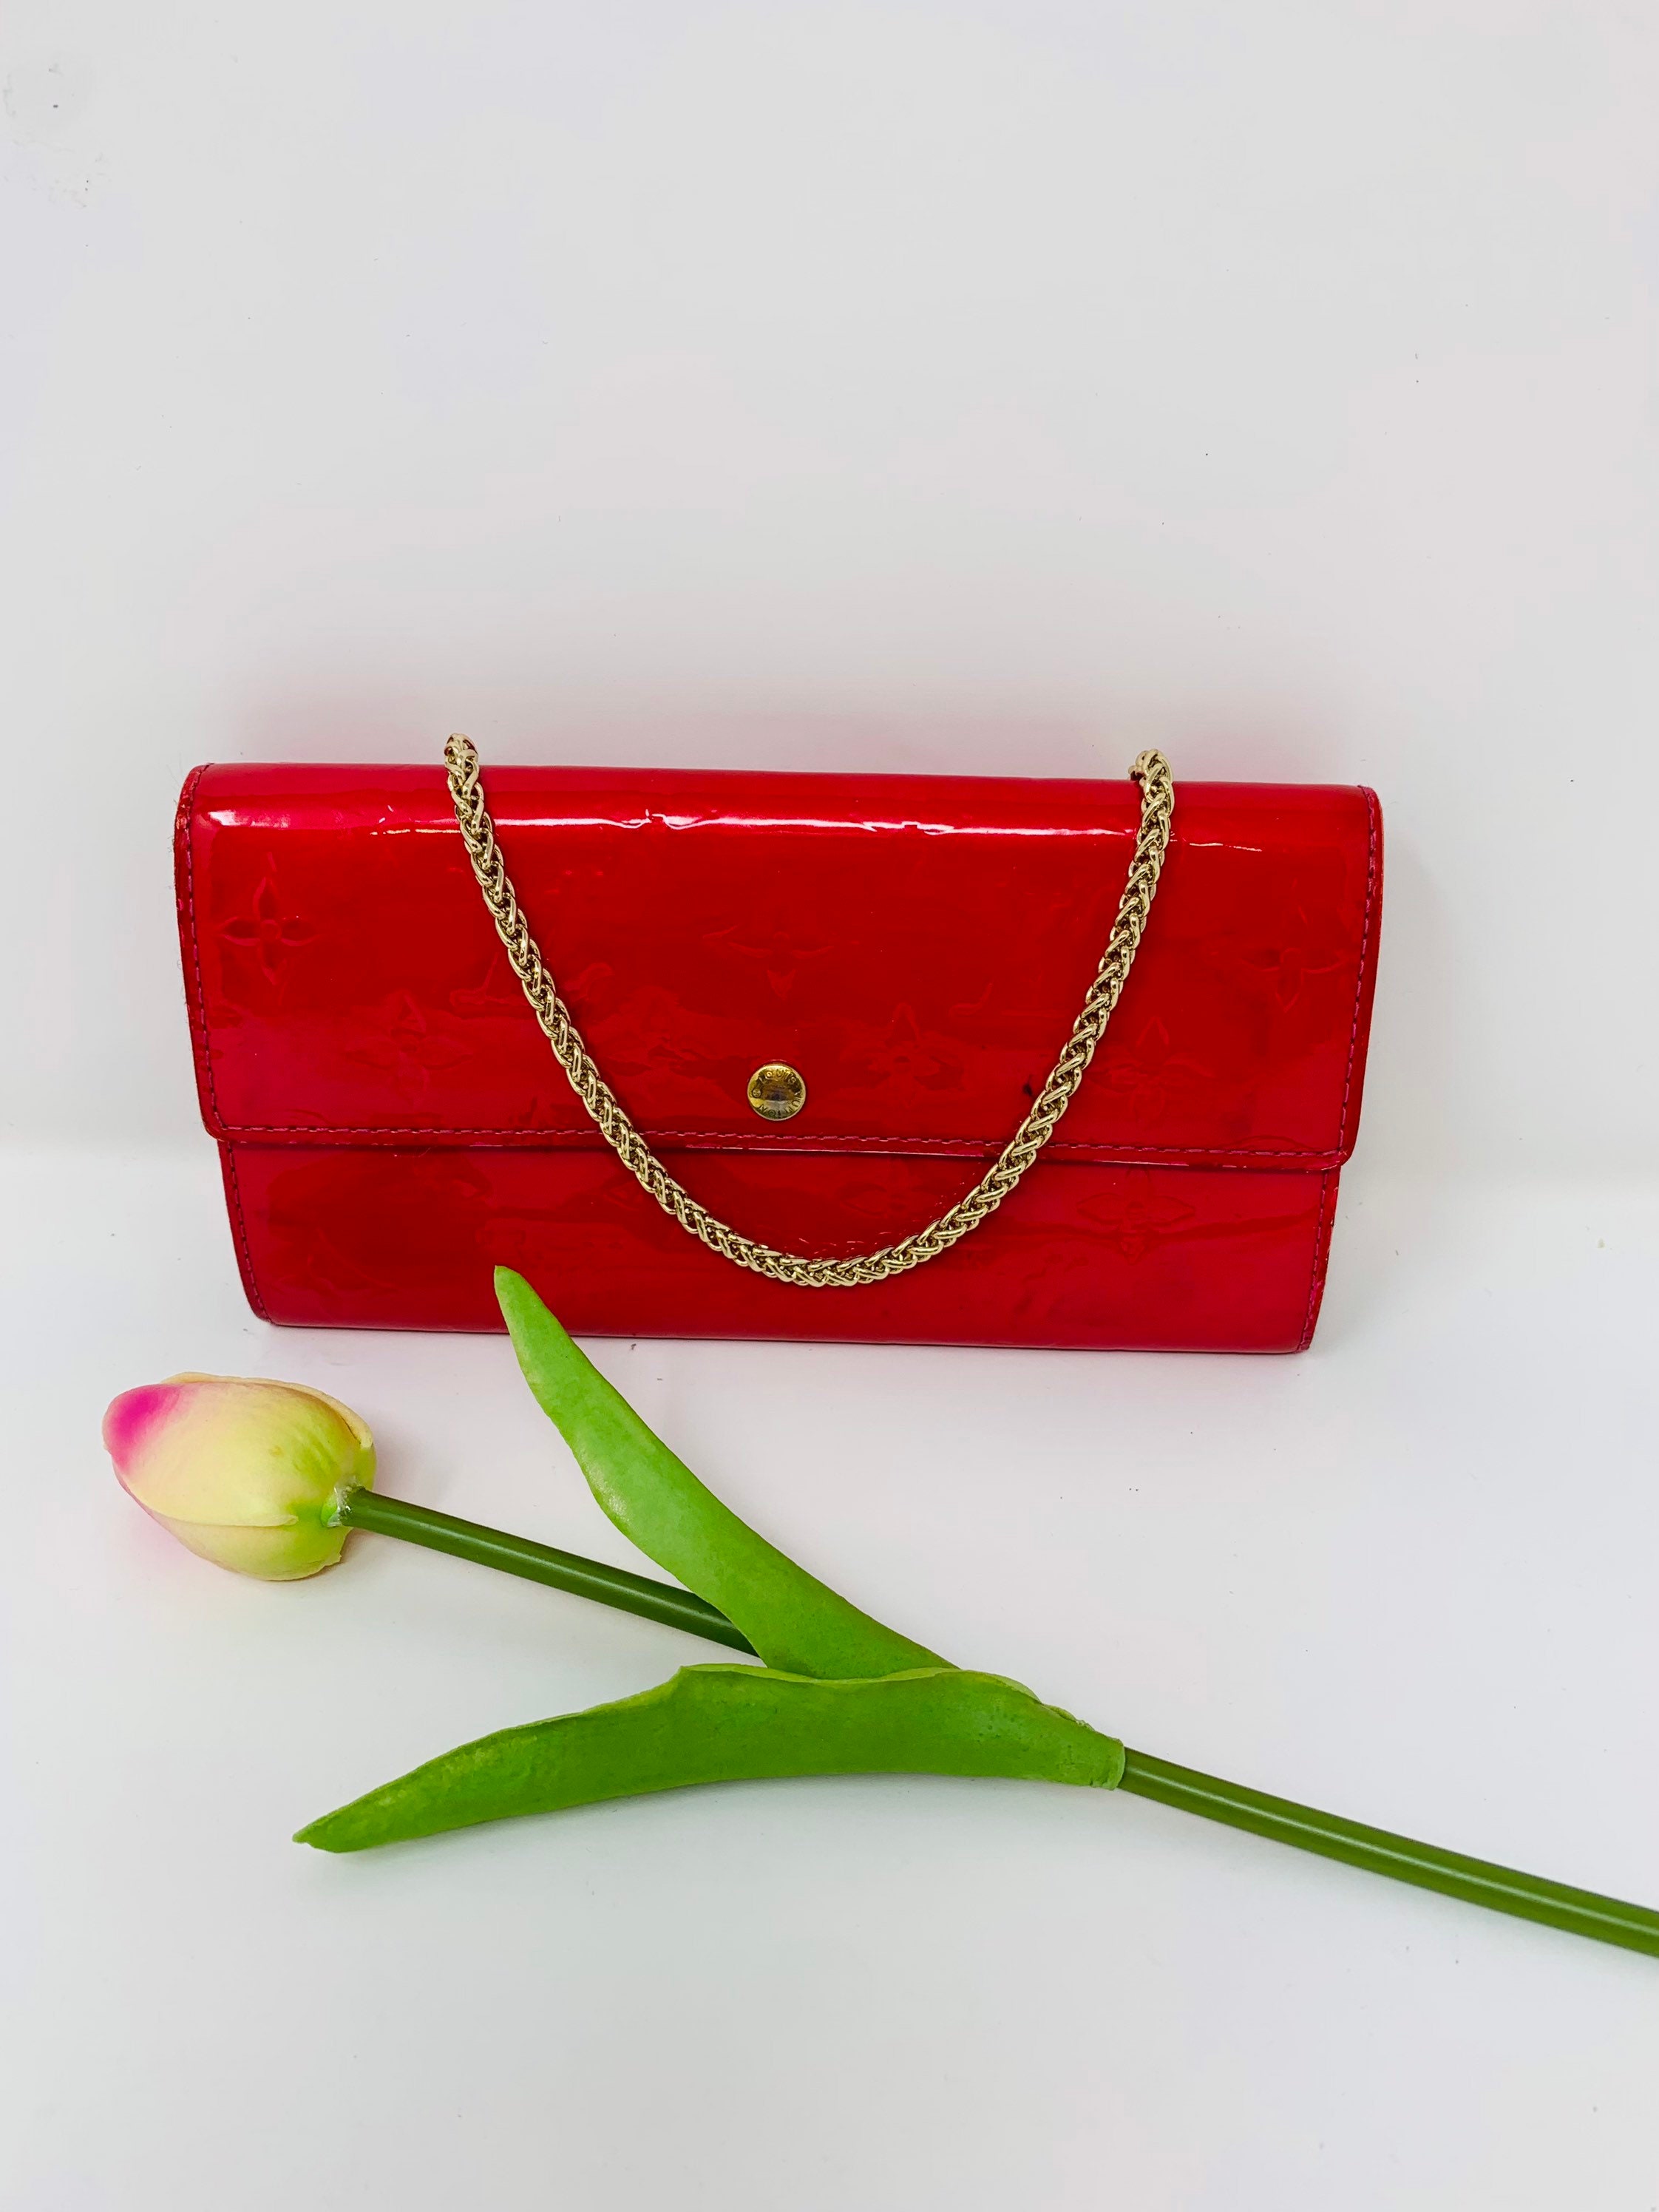 purse #pink #aesthetic #designers #louisvuitton #louisvuittonhandbags  #wallet #expensive PINK LOUIS VUITTON BAG AND WALLET CHECKER #Checke…